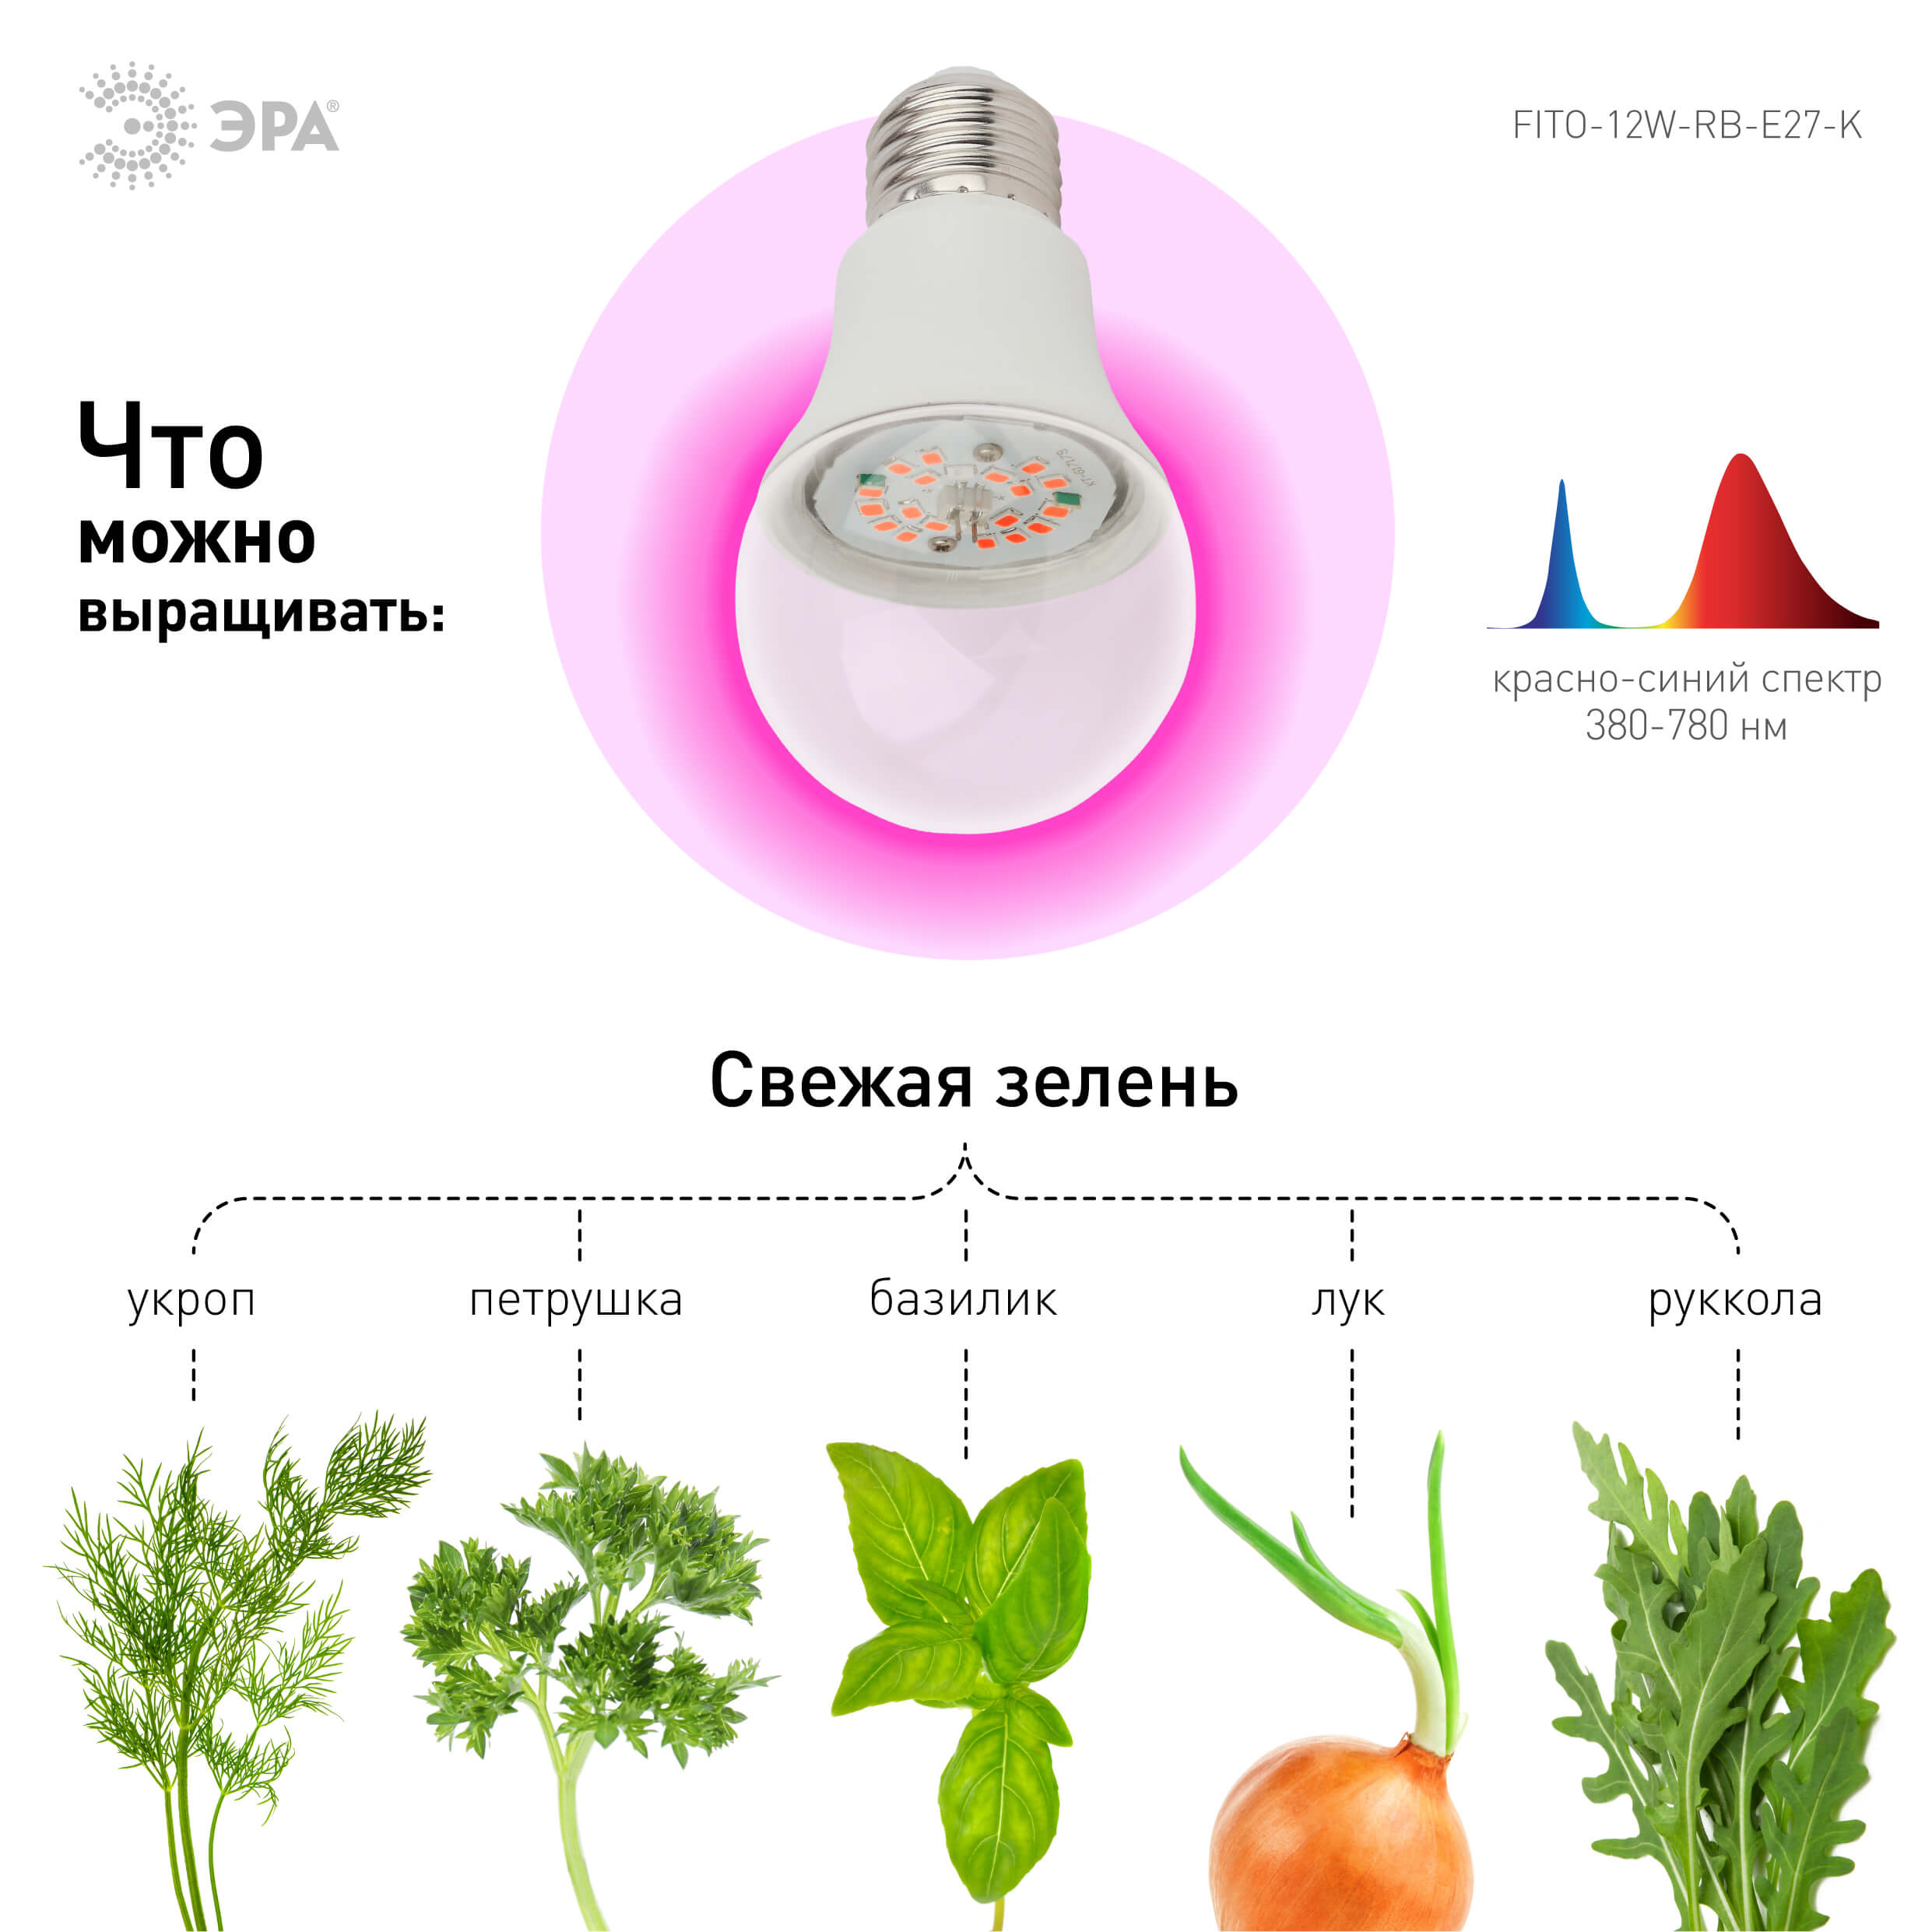 Фитолампа для растений светодиодная ЭРА E27 12W 1310K FITO-12W-RB-E27-K Б0039070 в Москве